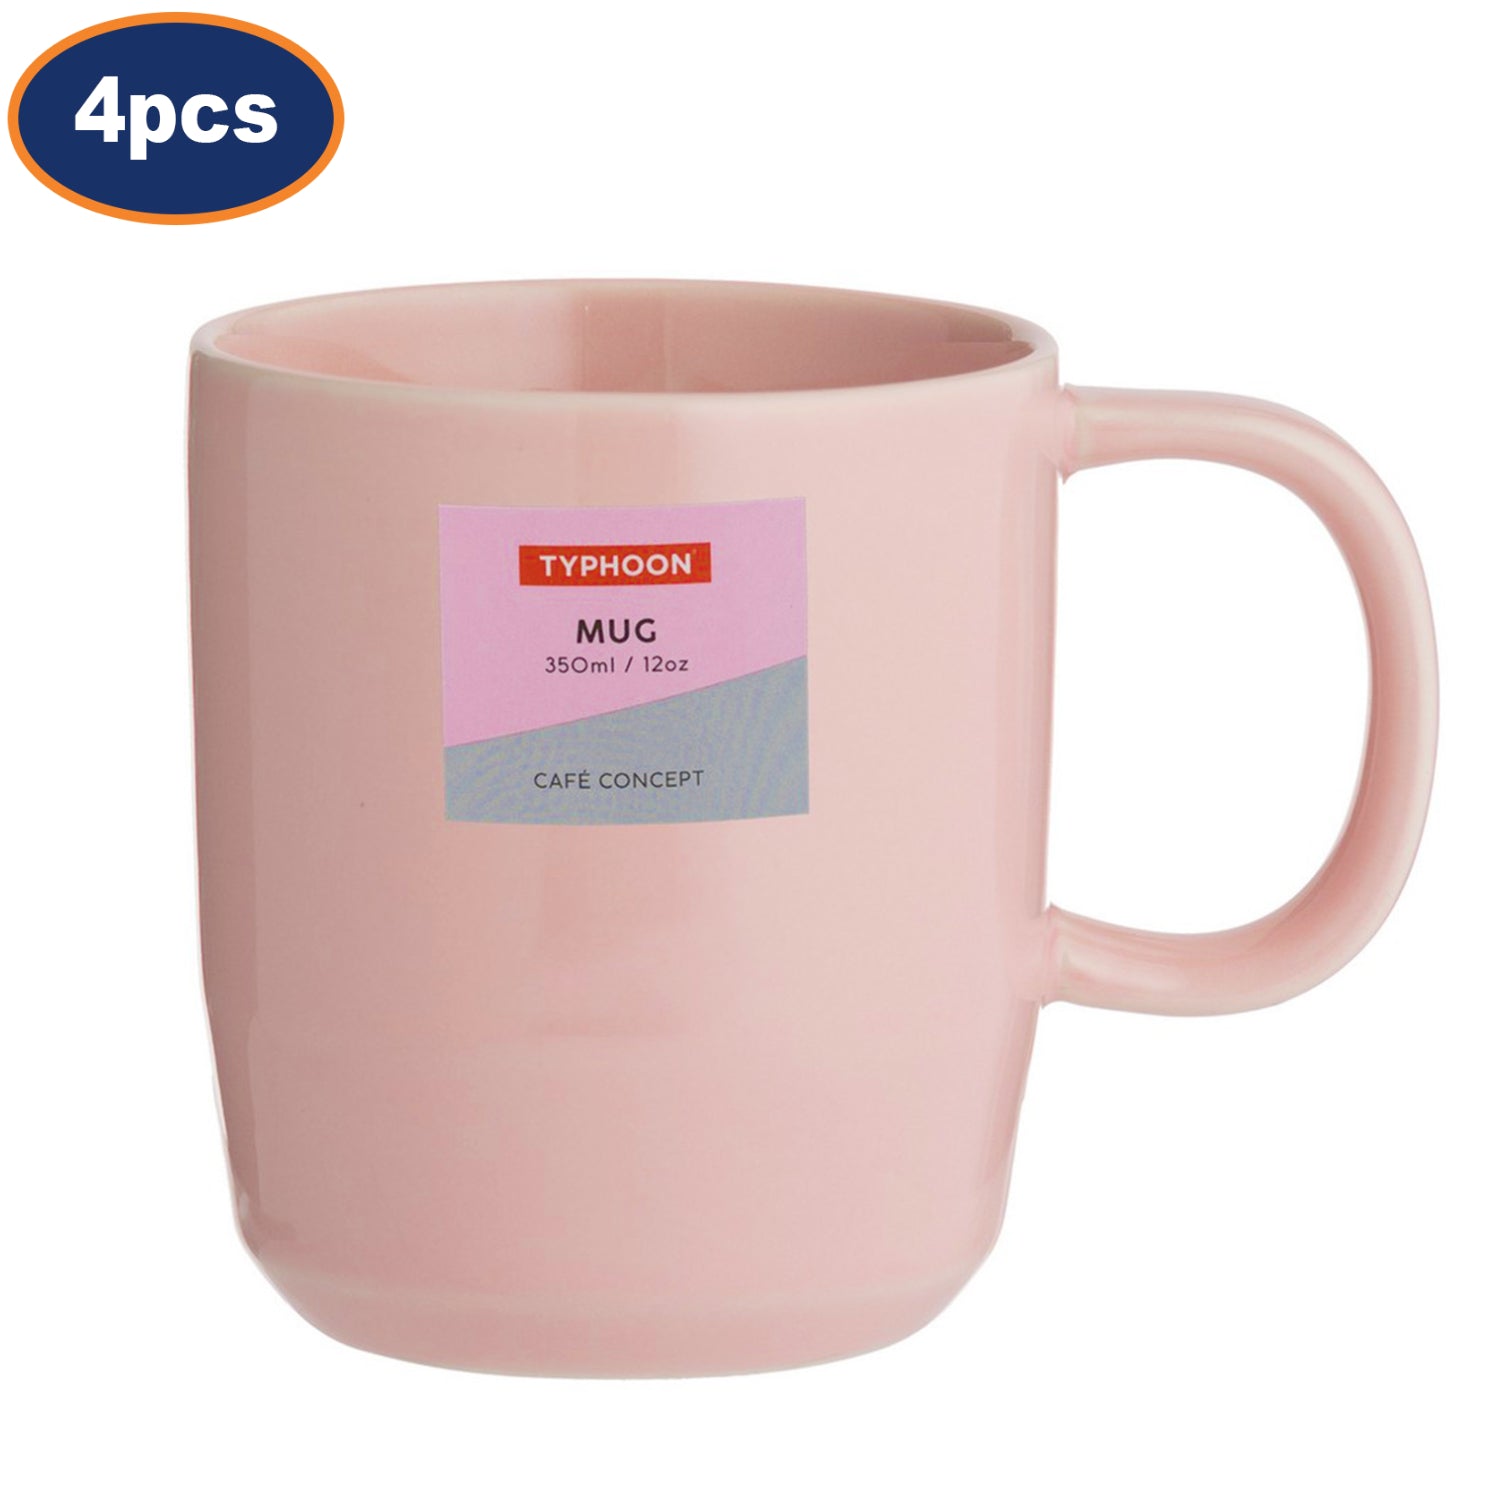 4Pcs Typhoon Cafe Concept 350ml Pink Mug